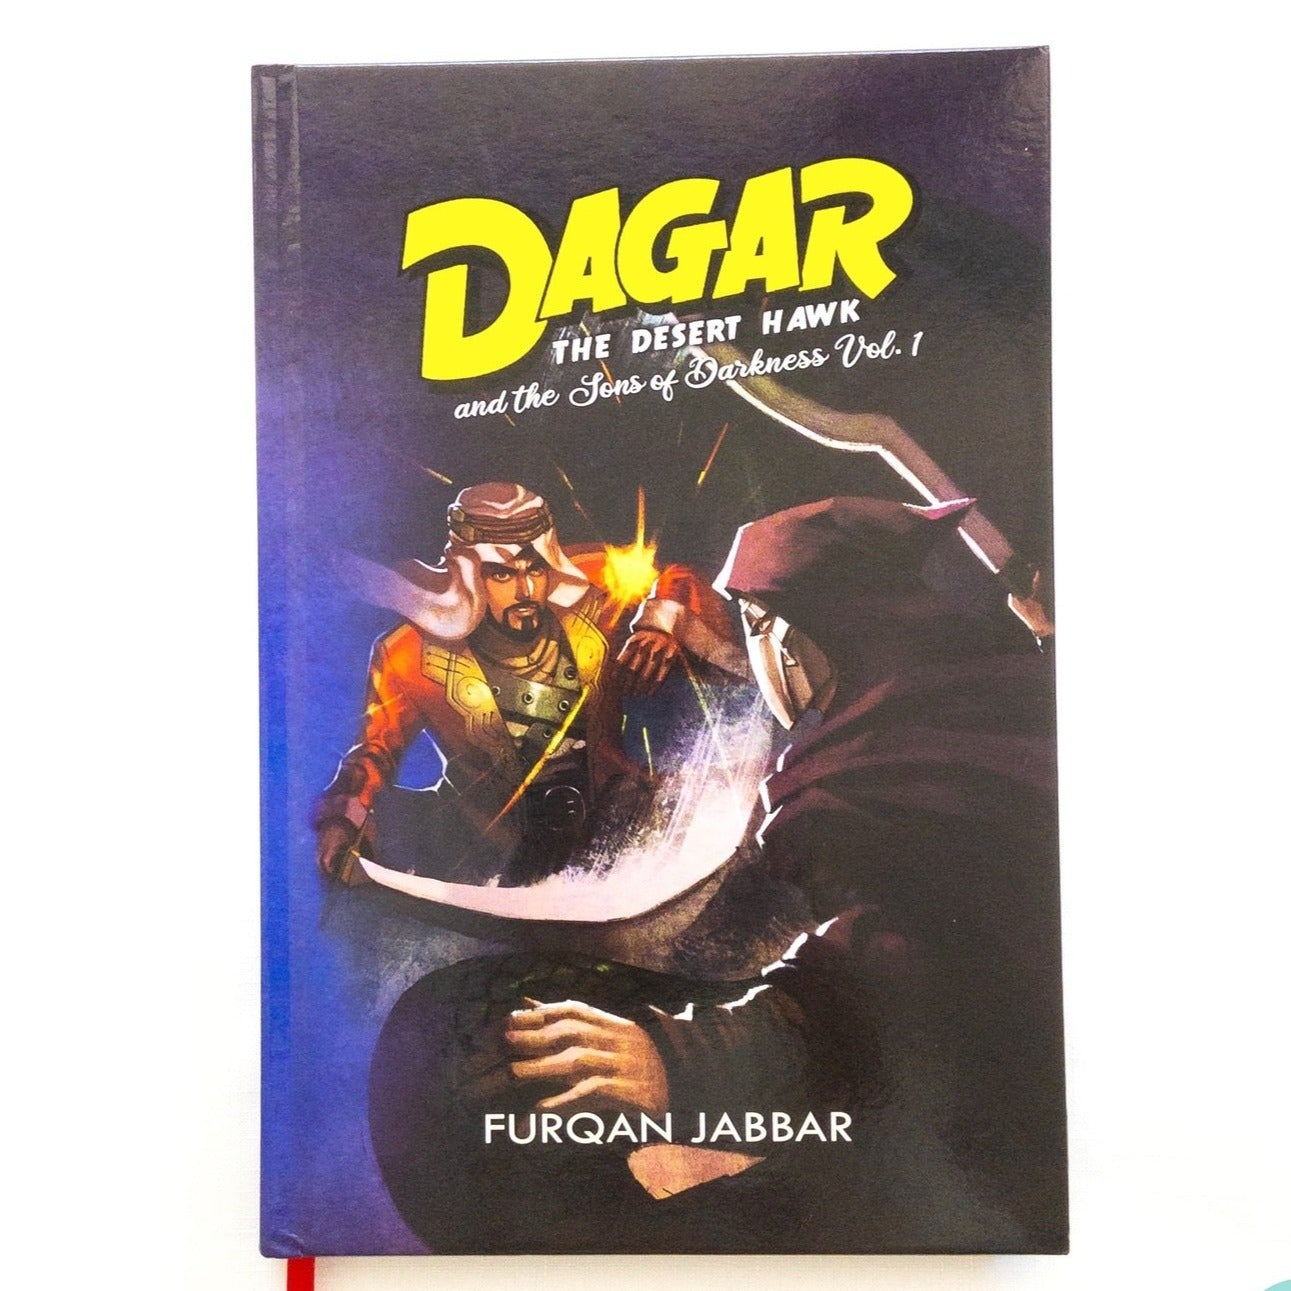 Dagar the Desert Hawk and the sons of Darkness Vol.1 - Noor Books